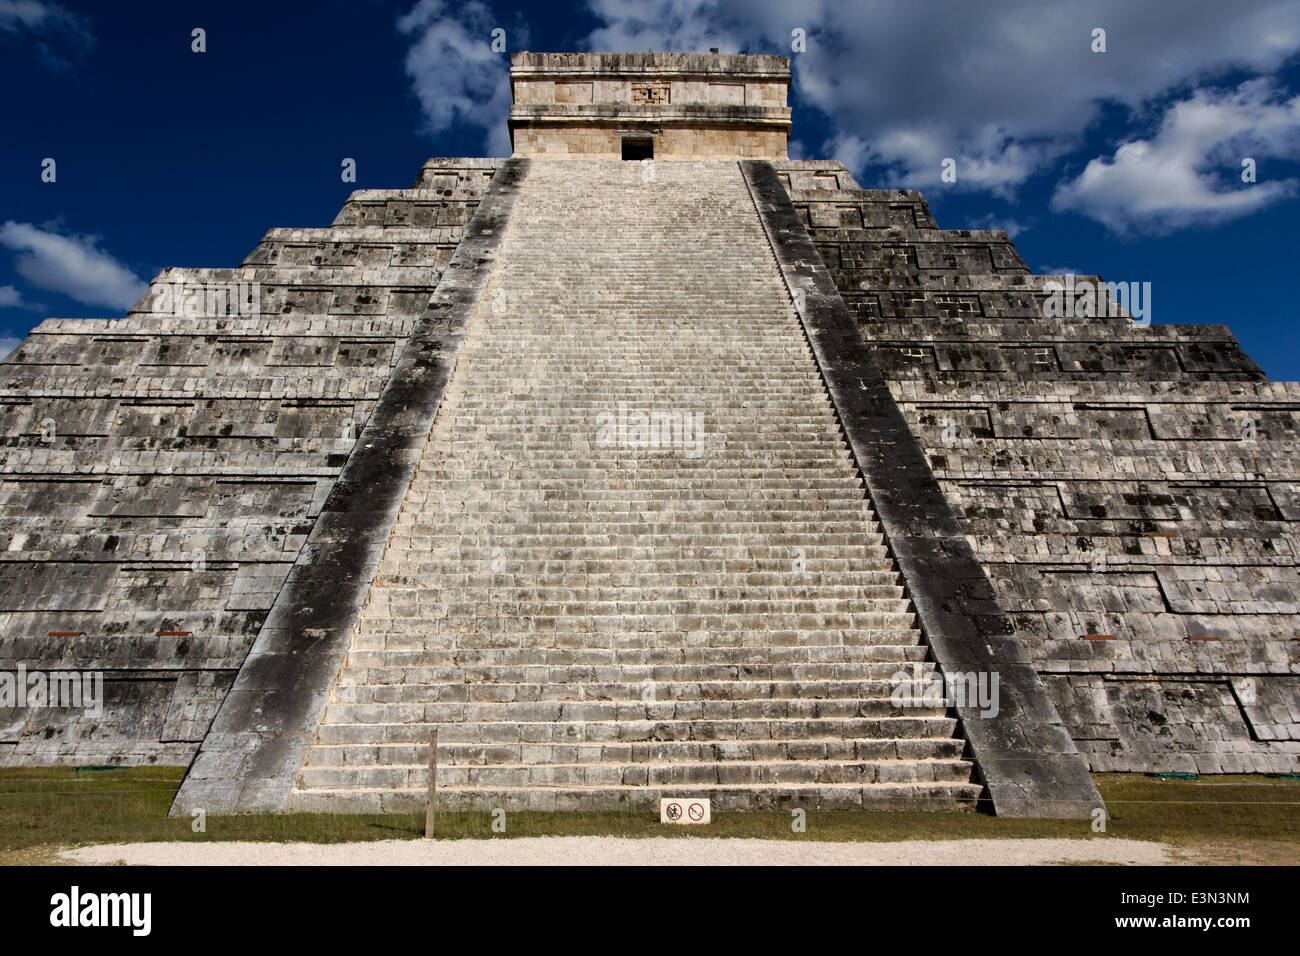 El Castillo, temple pyramid to Mayan serpent god Kukulkan, in Chichen Itza, Yucatan, Mexico. Stock Photo